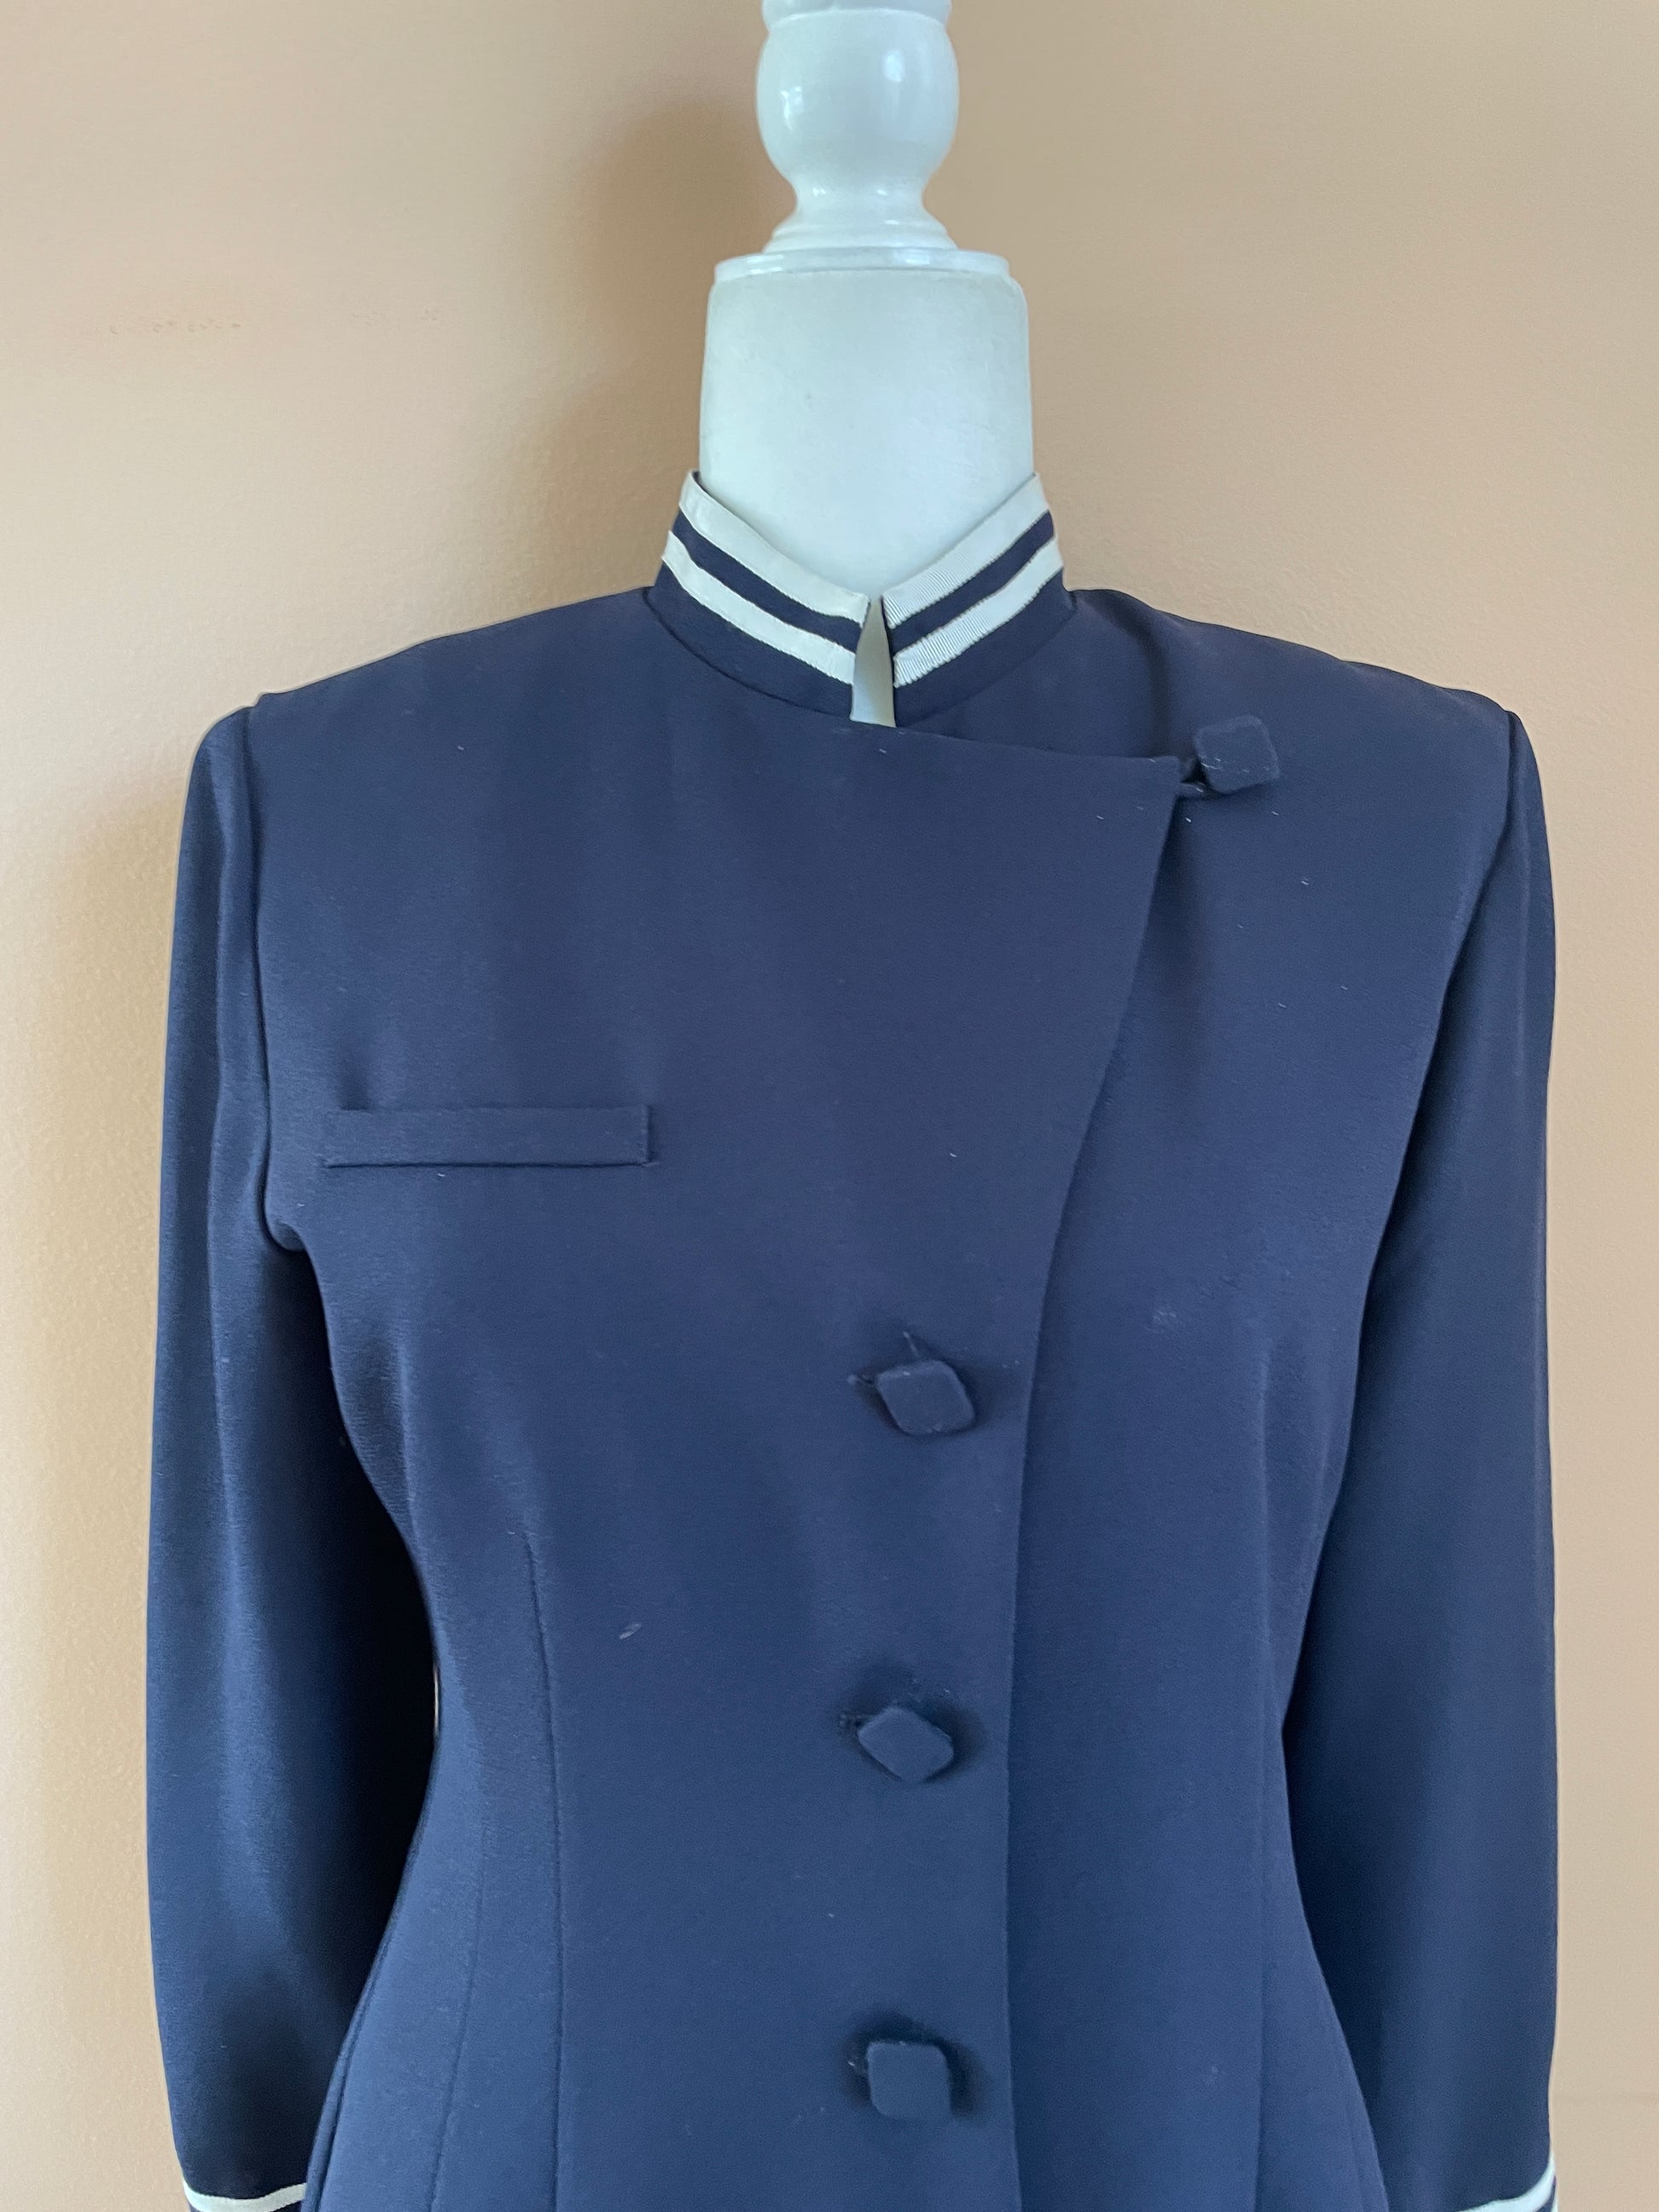  80s Vintage Jessica Howard Poly Navy Jacket Style Dress